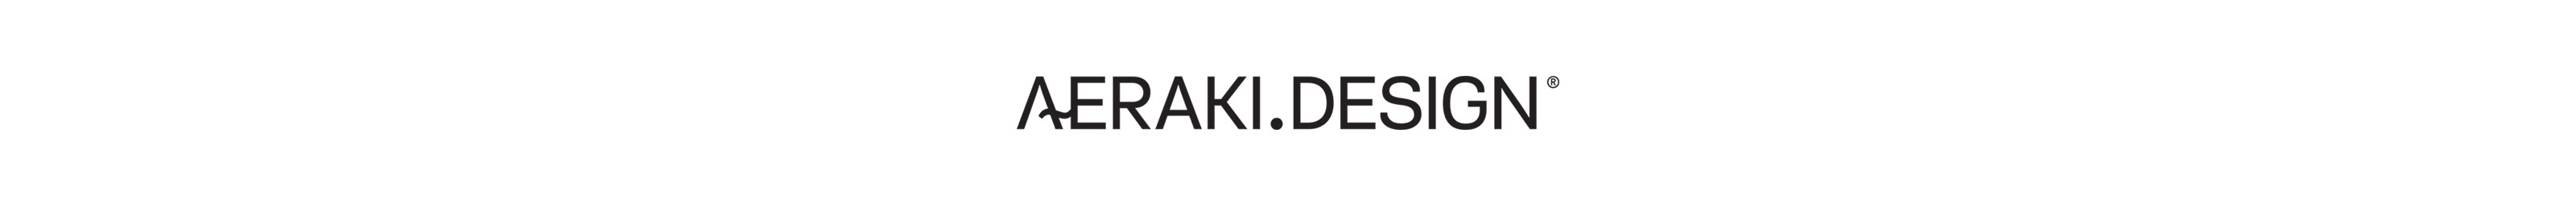 AERAKI DESIGN's profile banner